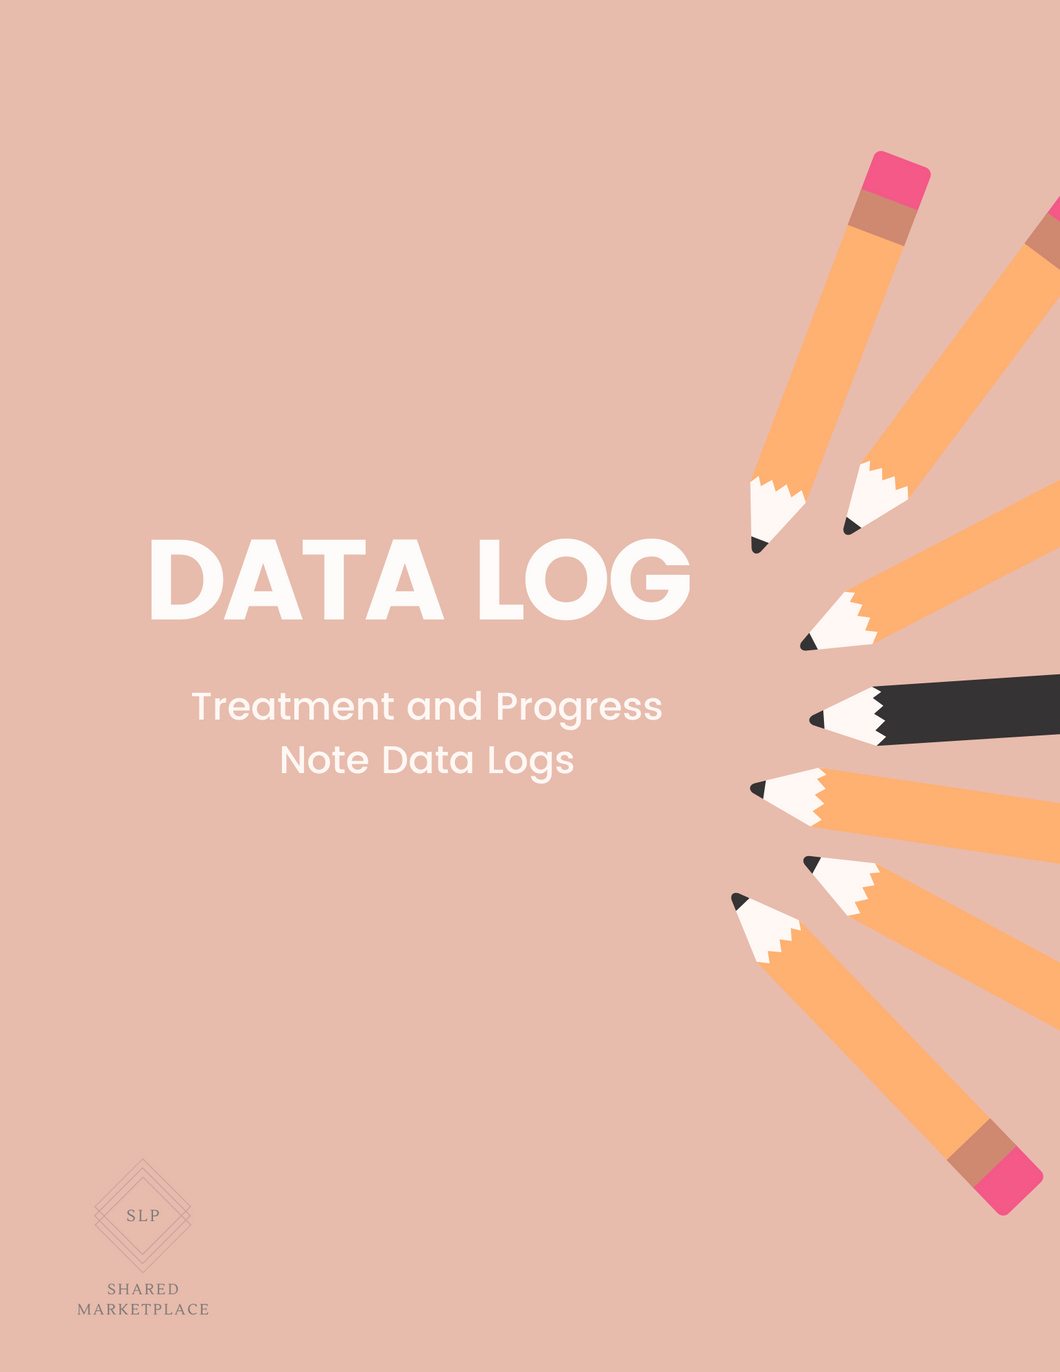 Treatment and Progress Note Data Log